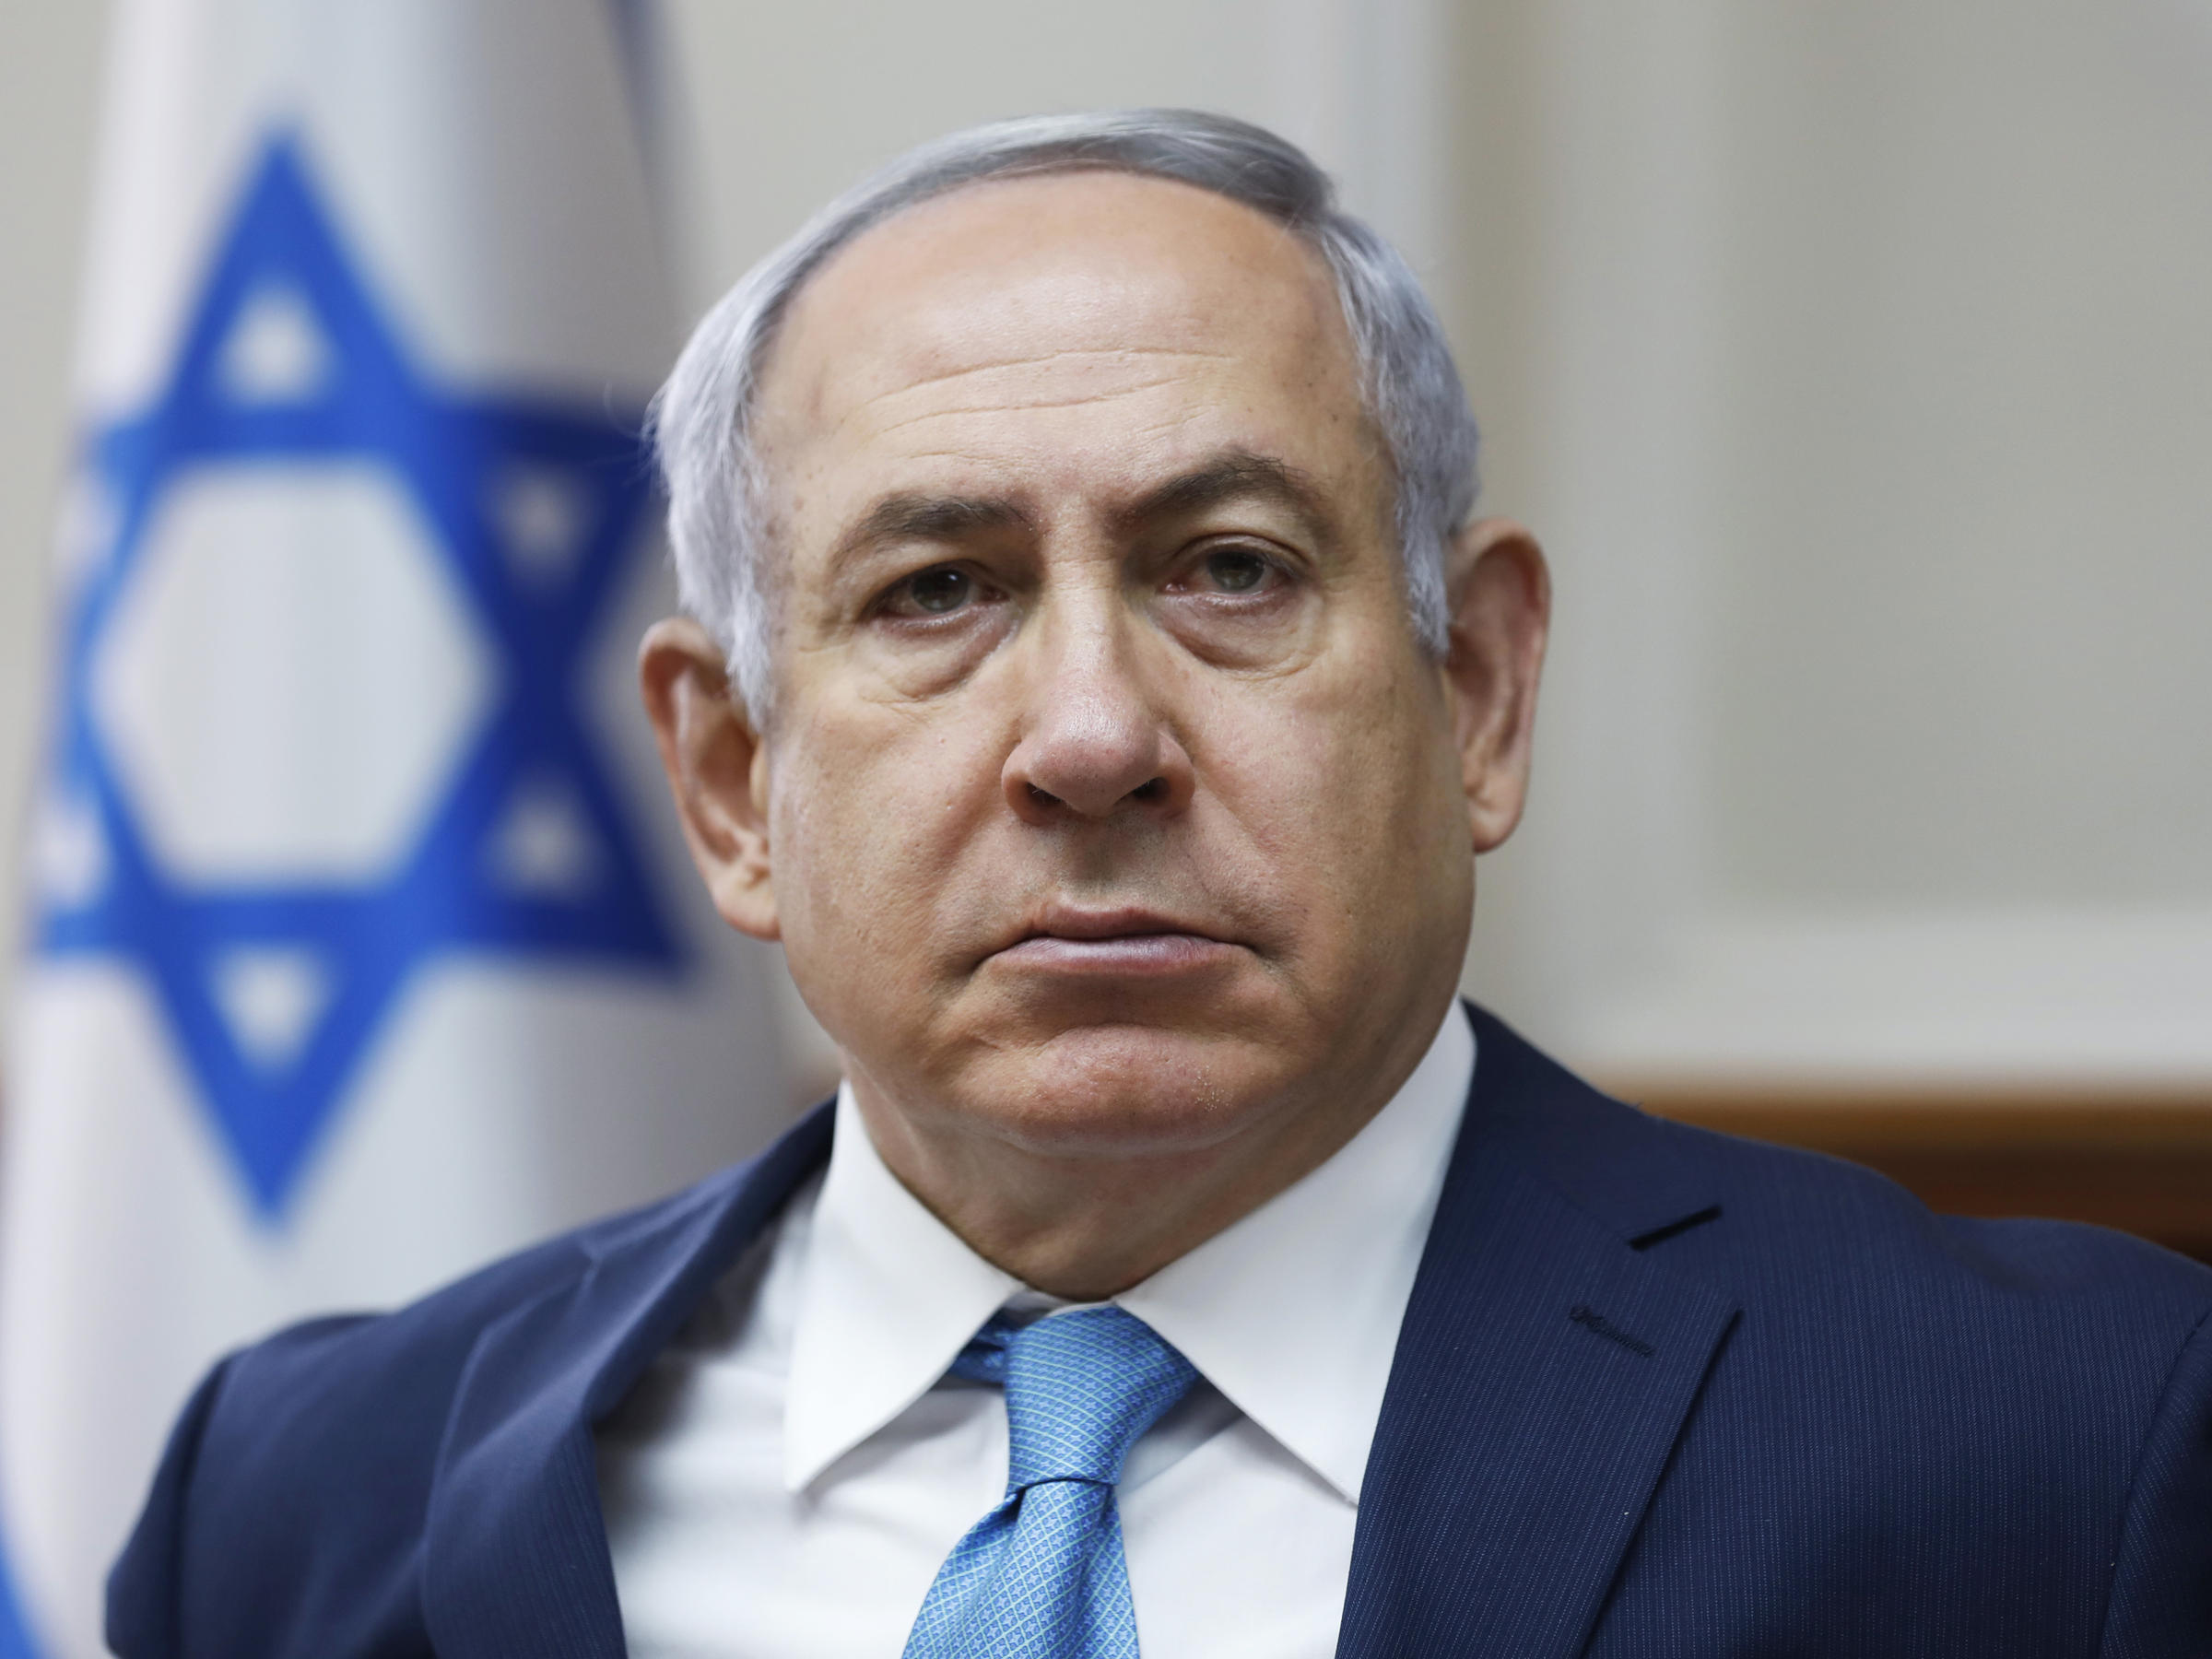 Israeli Police Push For Prime Minister Netanyahu's Indictment On